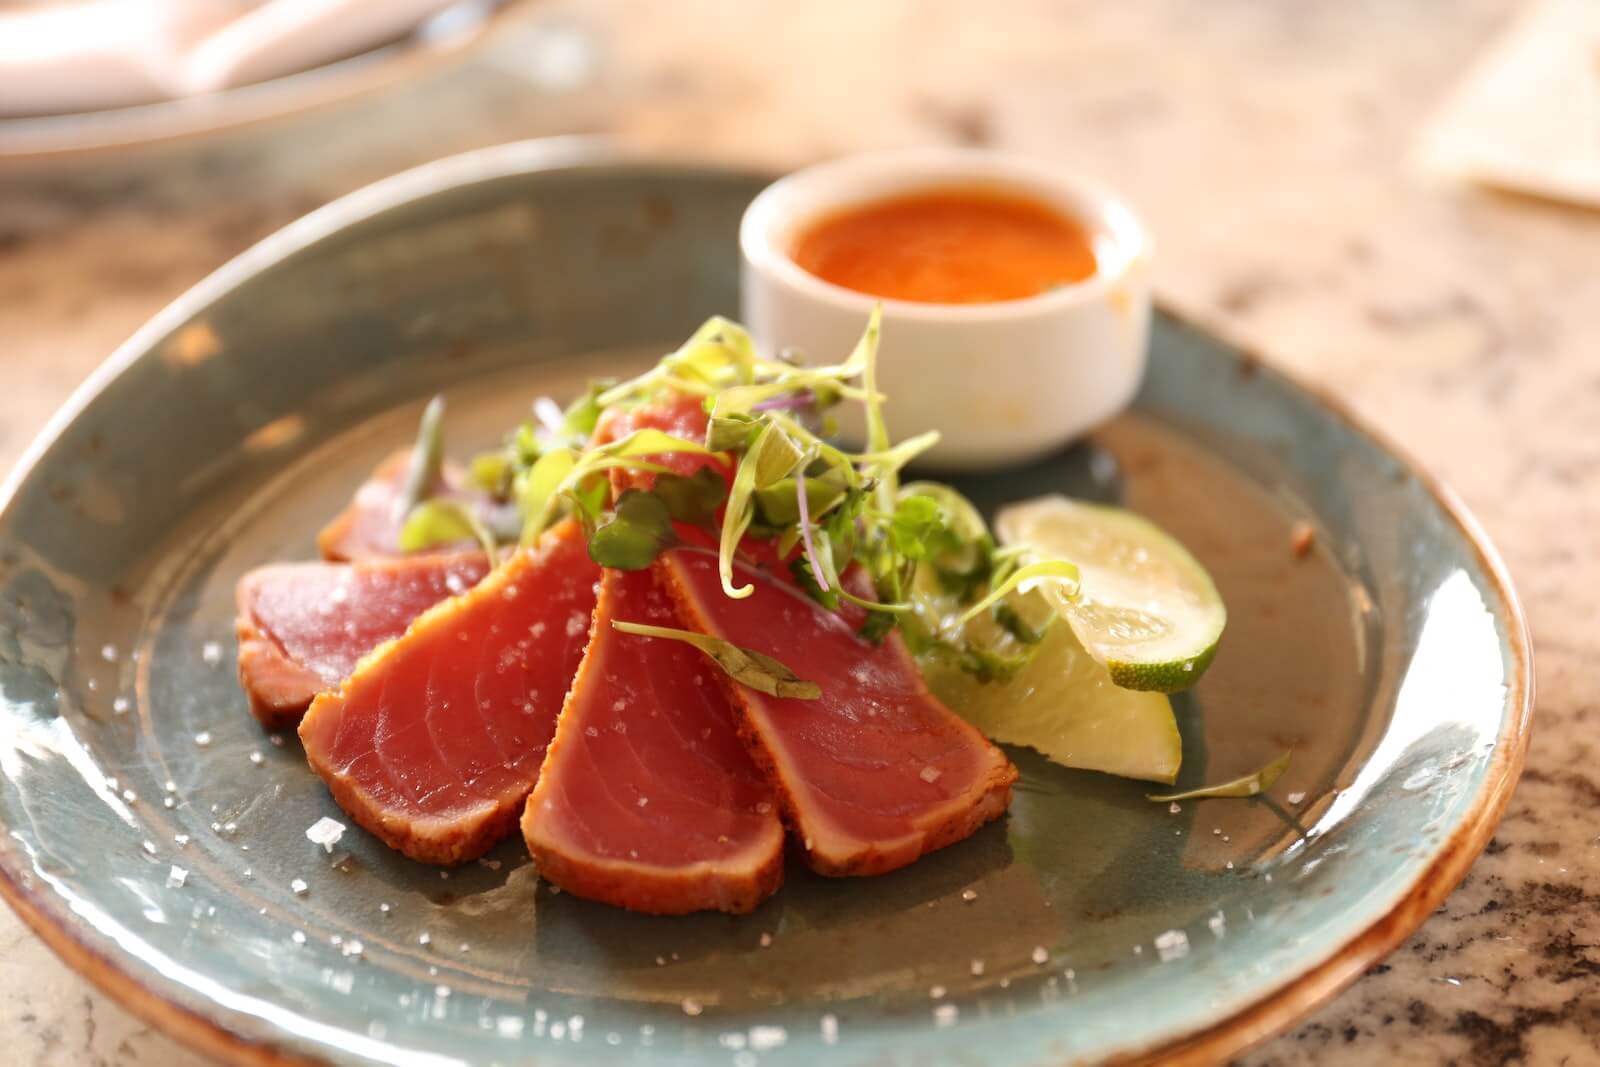 Seared tuna on a plate